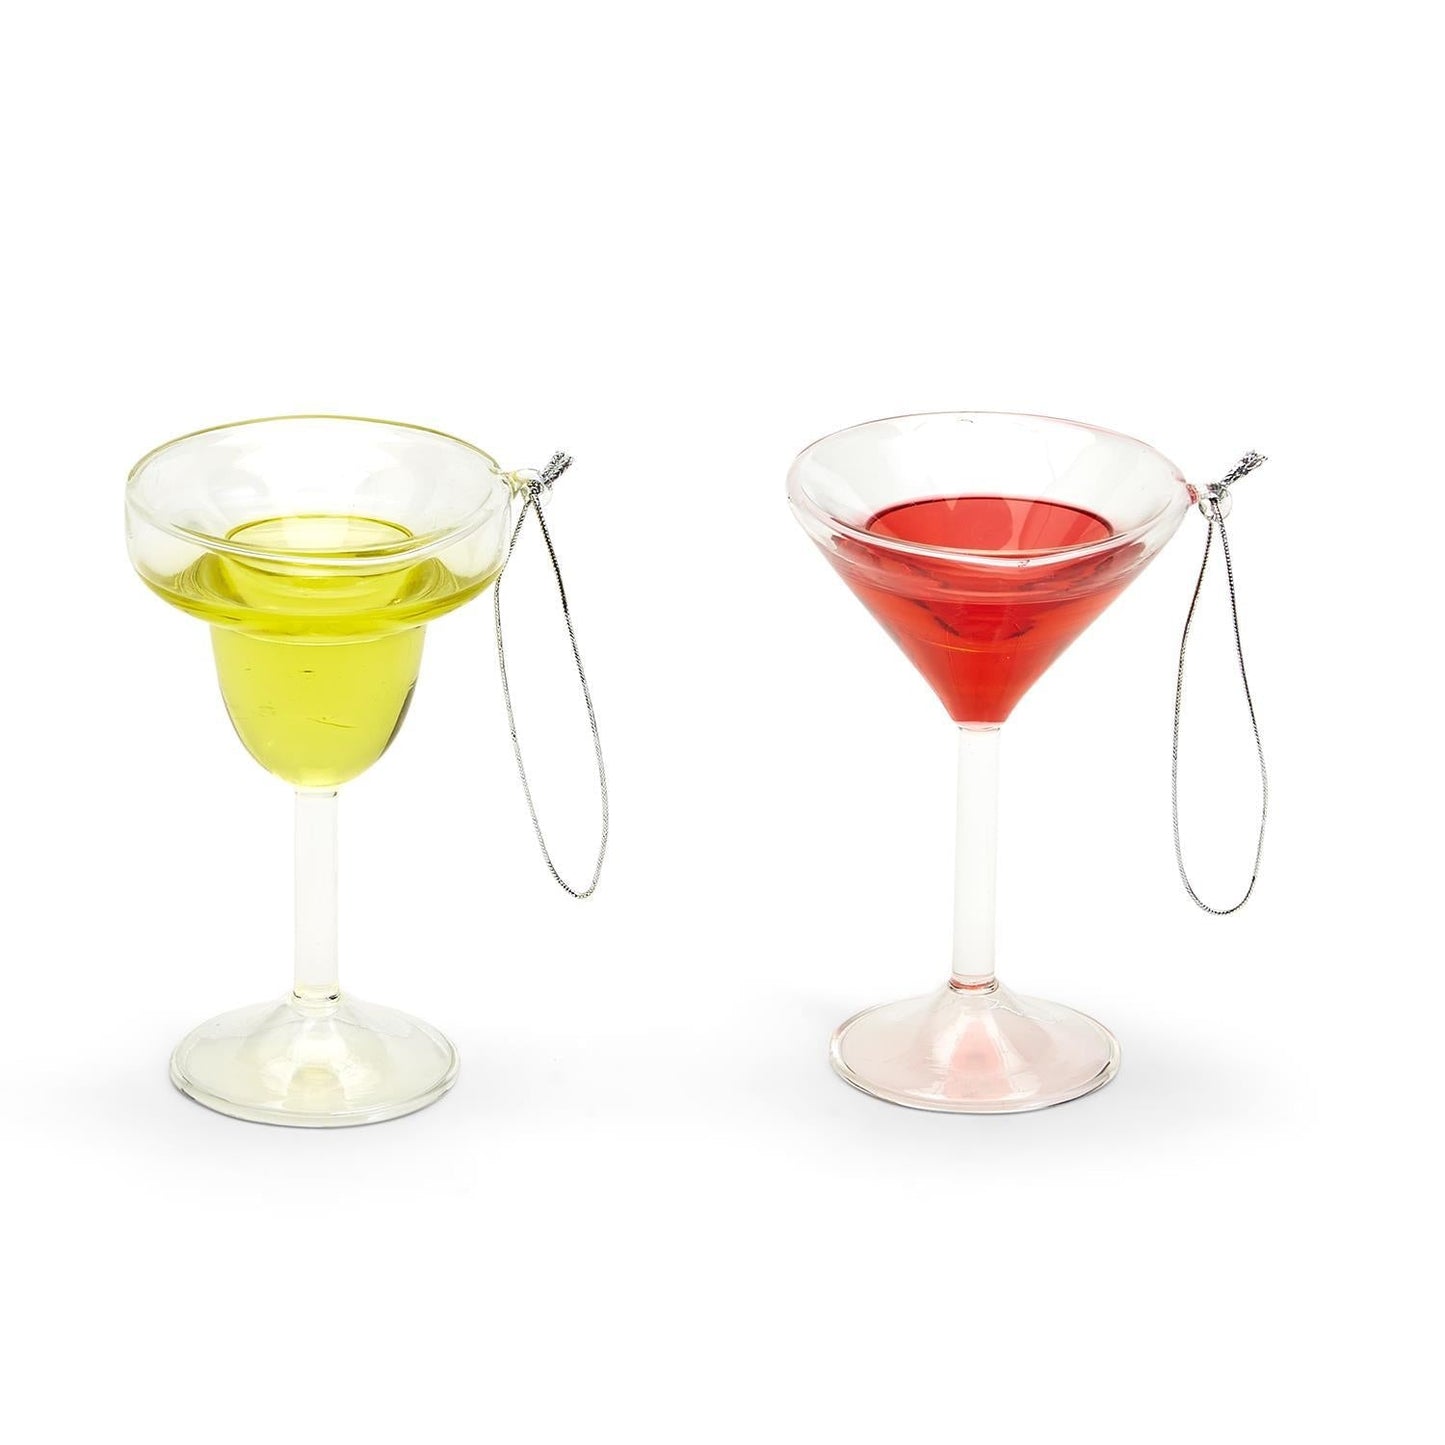 The Bullish Store - Hand-Crafted Glass Ornaments - Wine, Martini, or Margarita